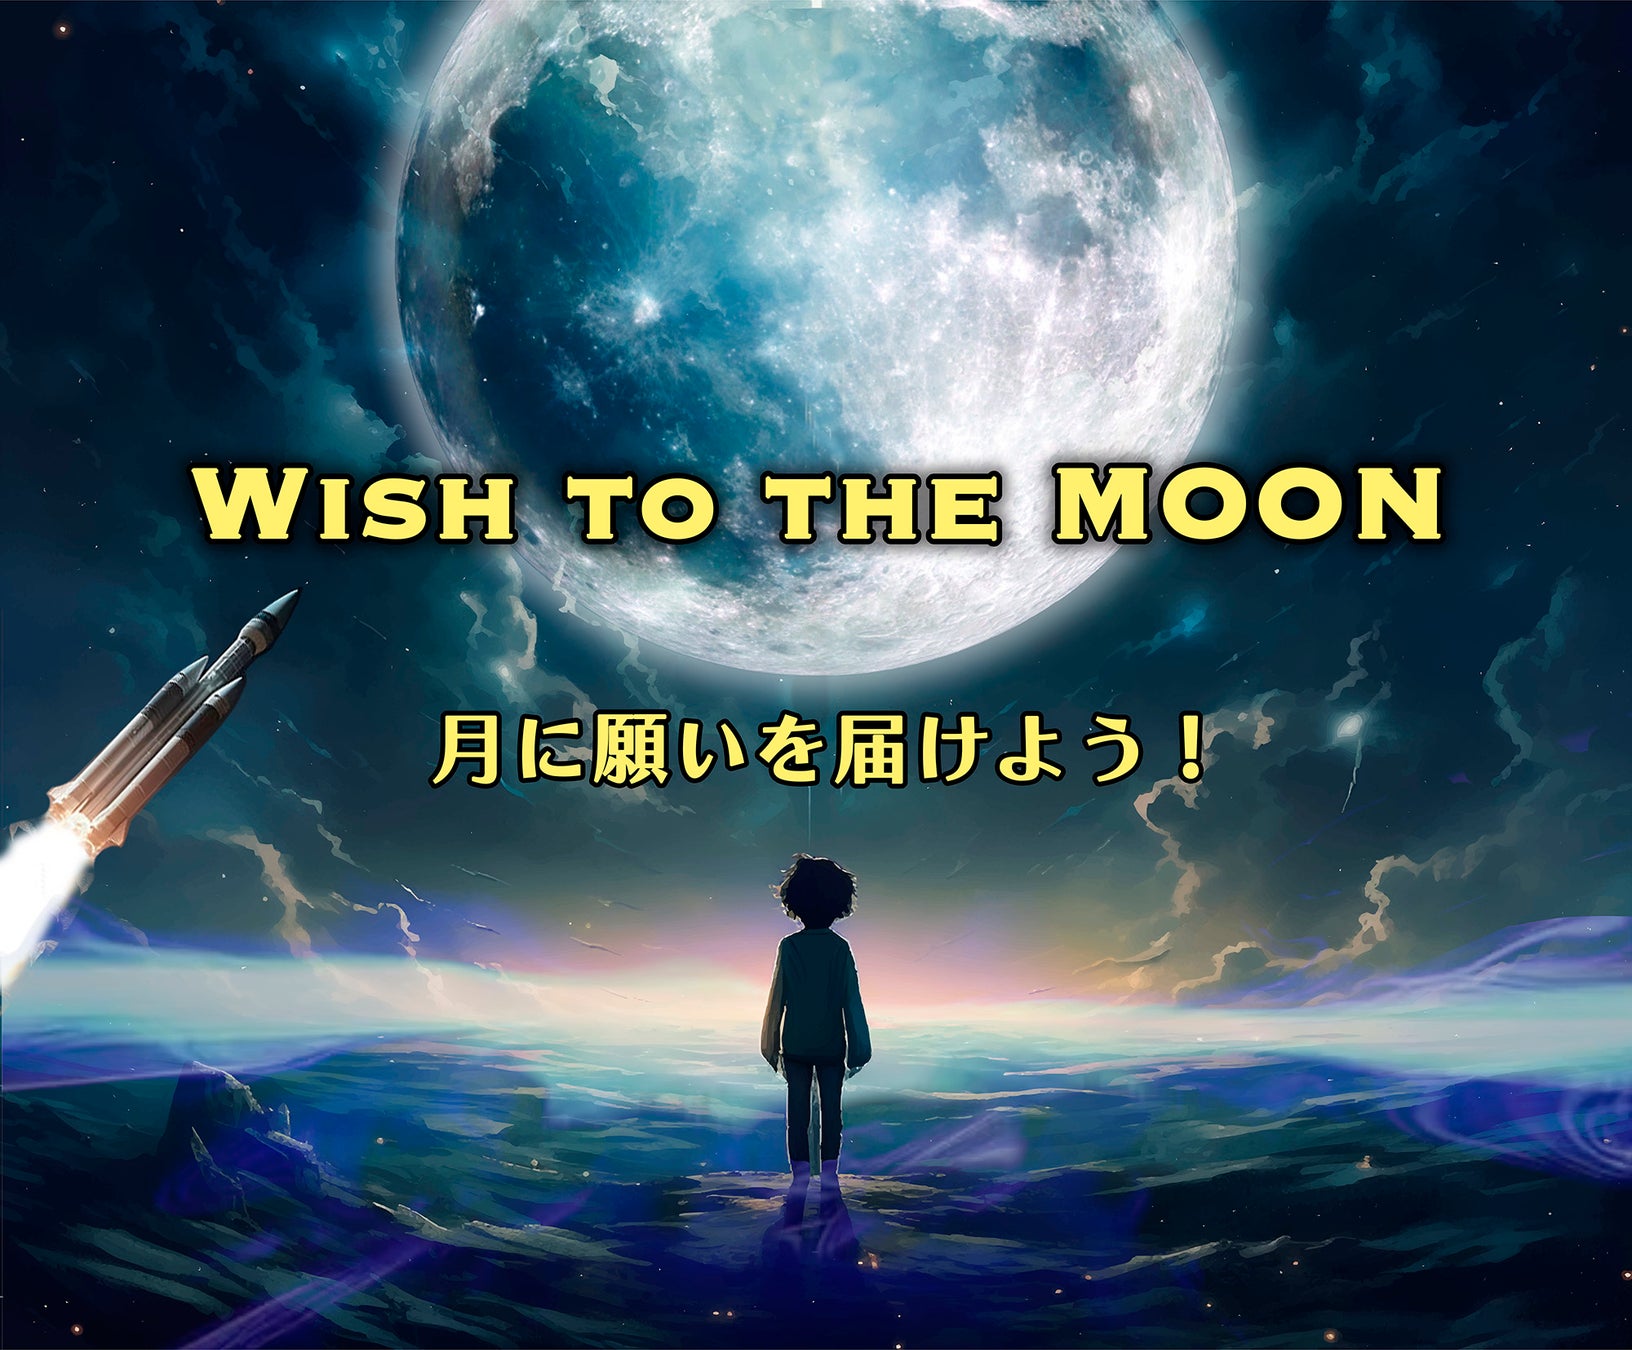 INAMI Space Laboratory株式会社が月面へ夢や願いを無料で送るサービス『 Wish to the MOON 』をローンチのサブ画像1